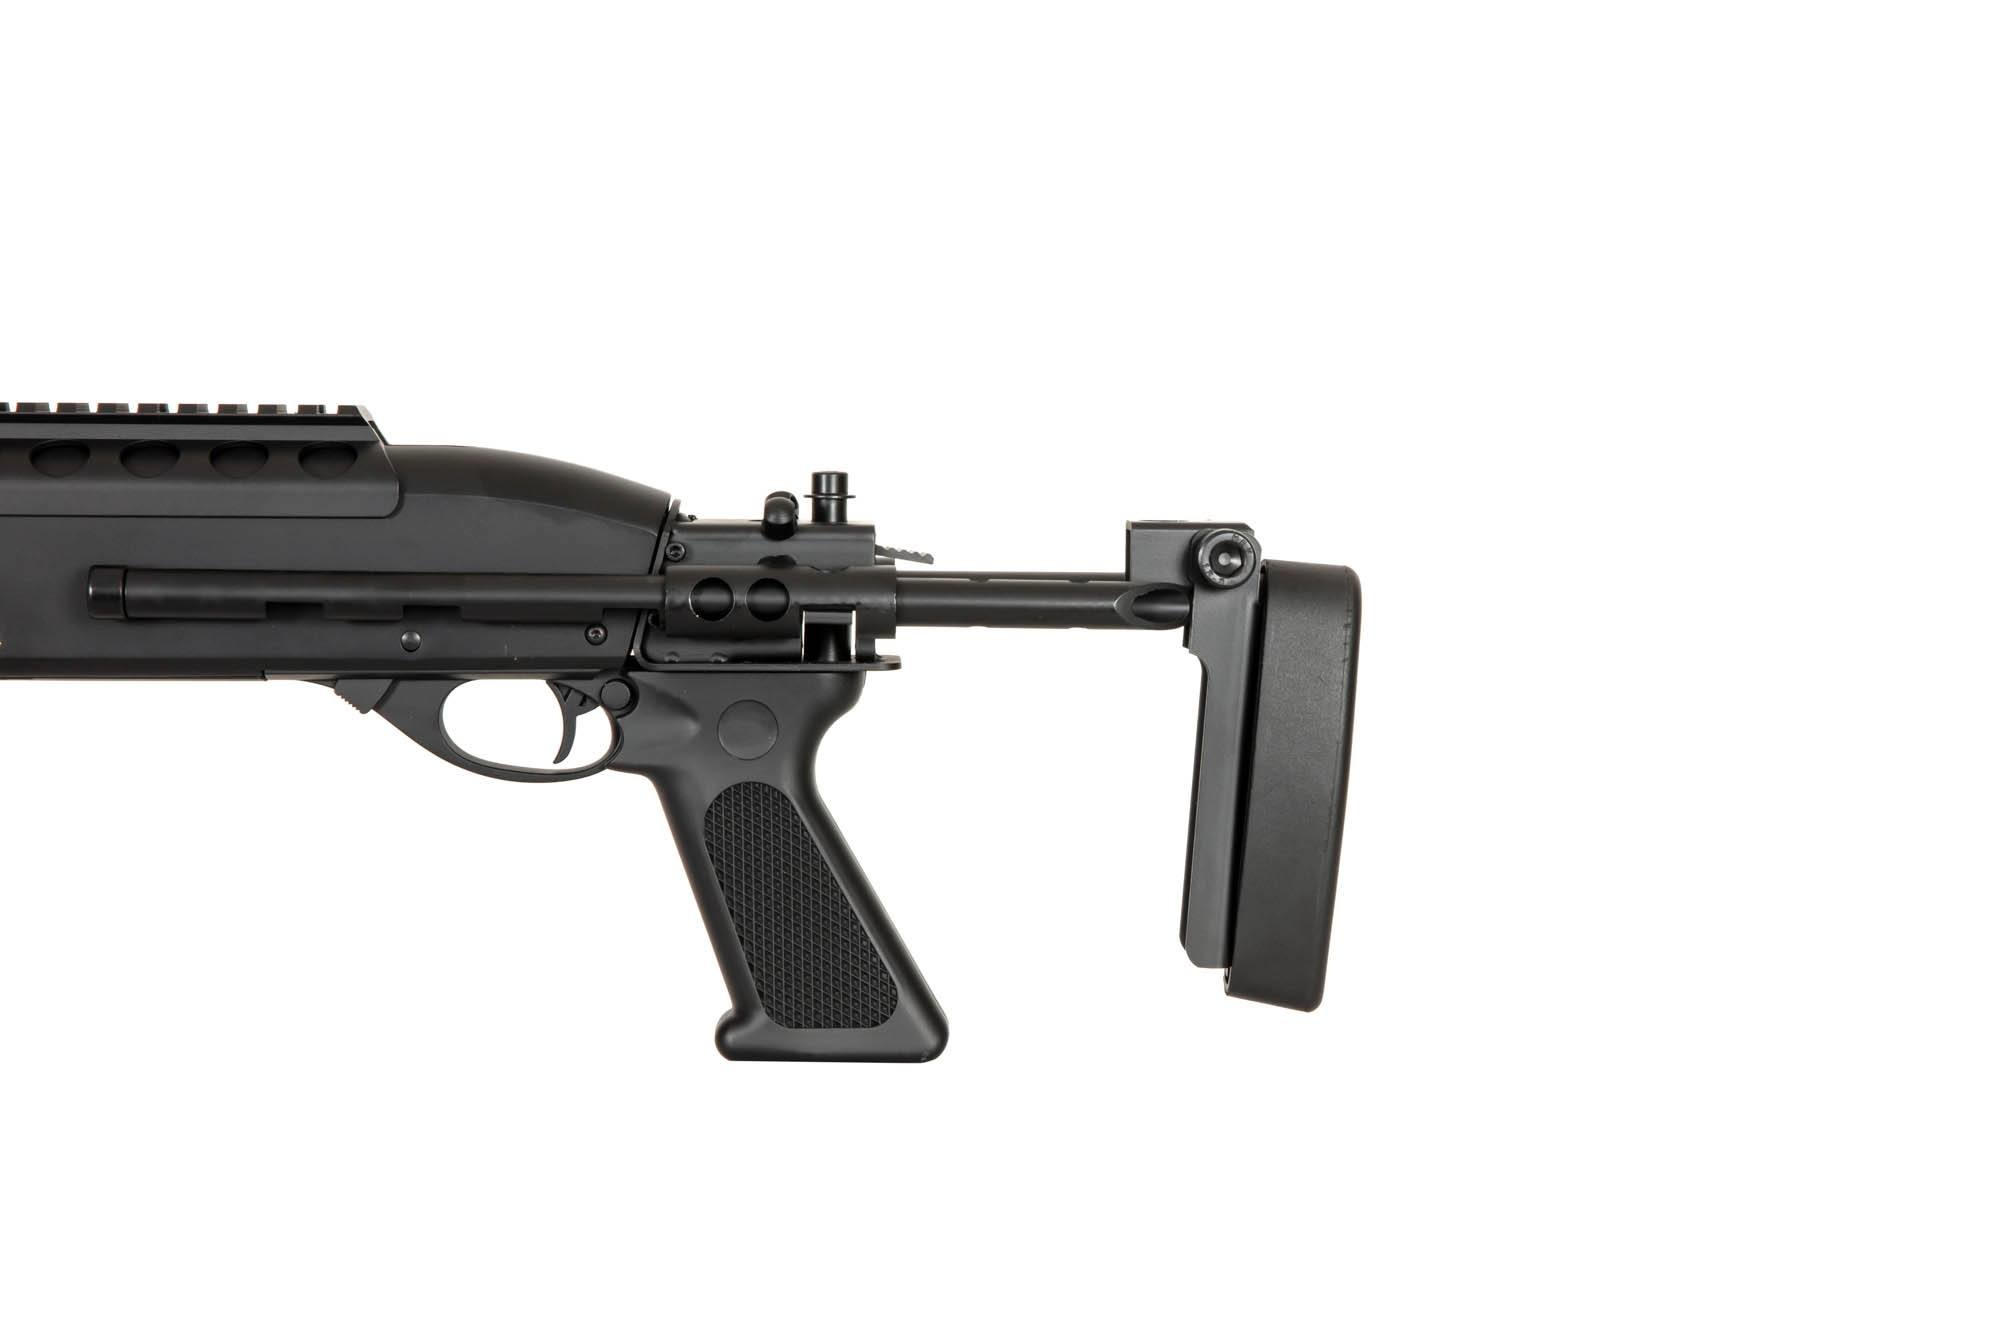 A&K SXR-006 tactical shotgun 3 burst 0.83 joules - BK